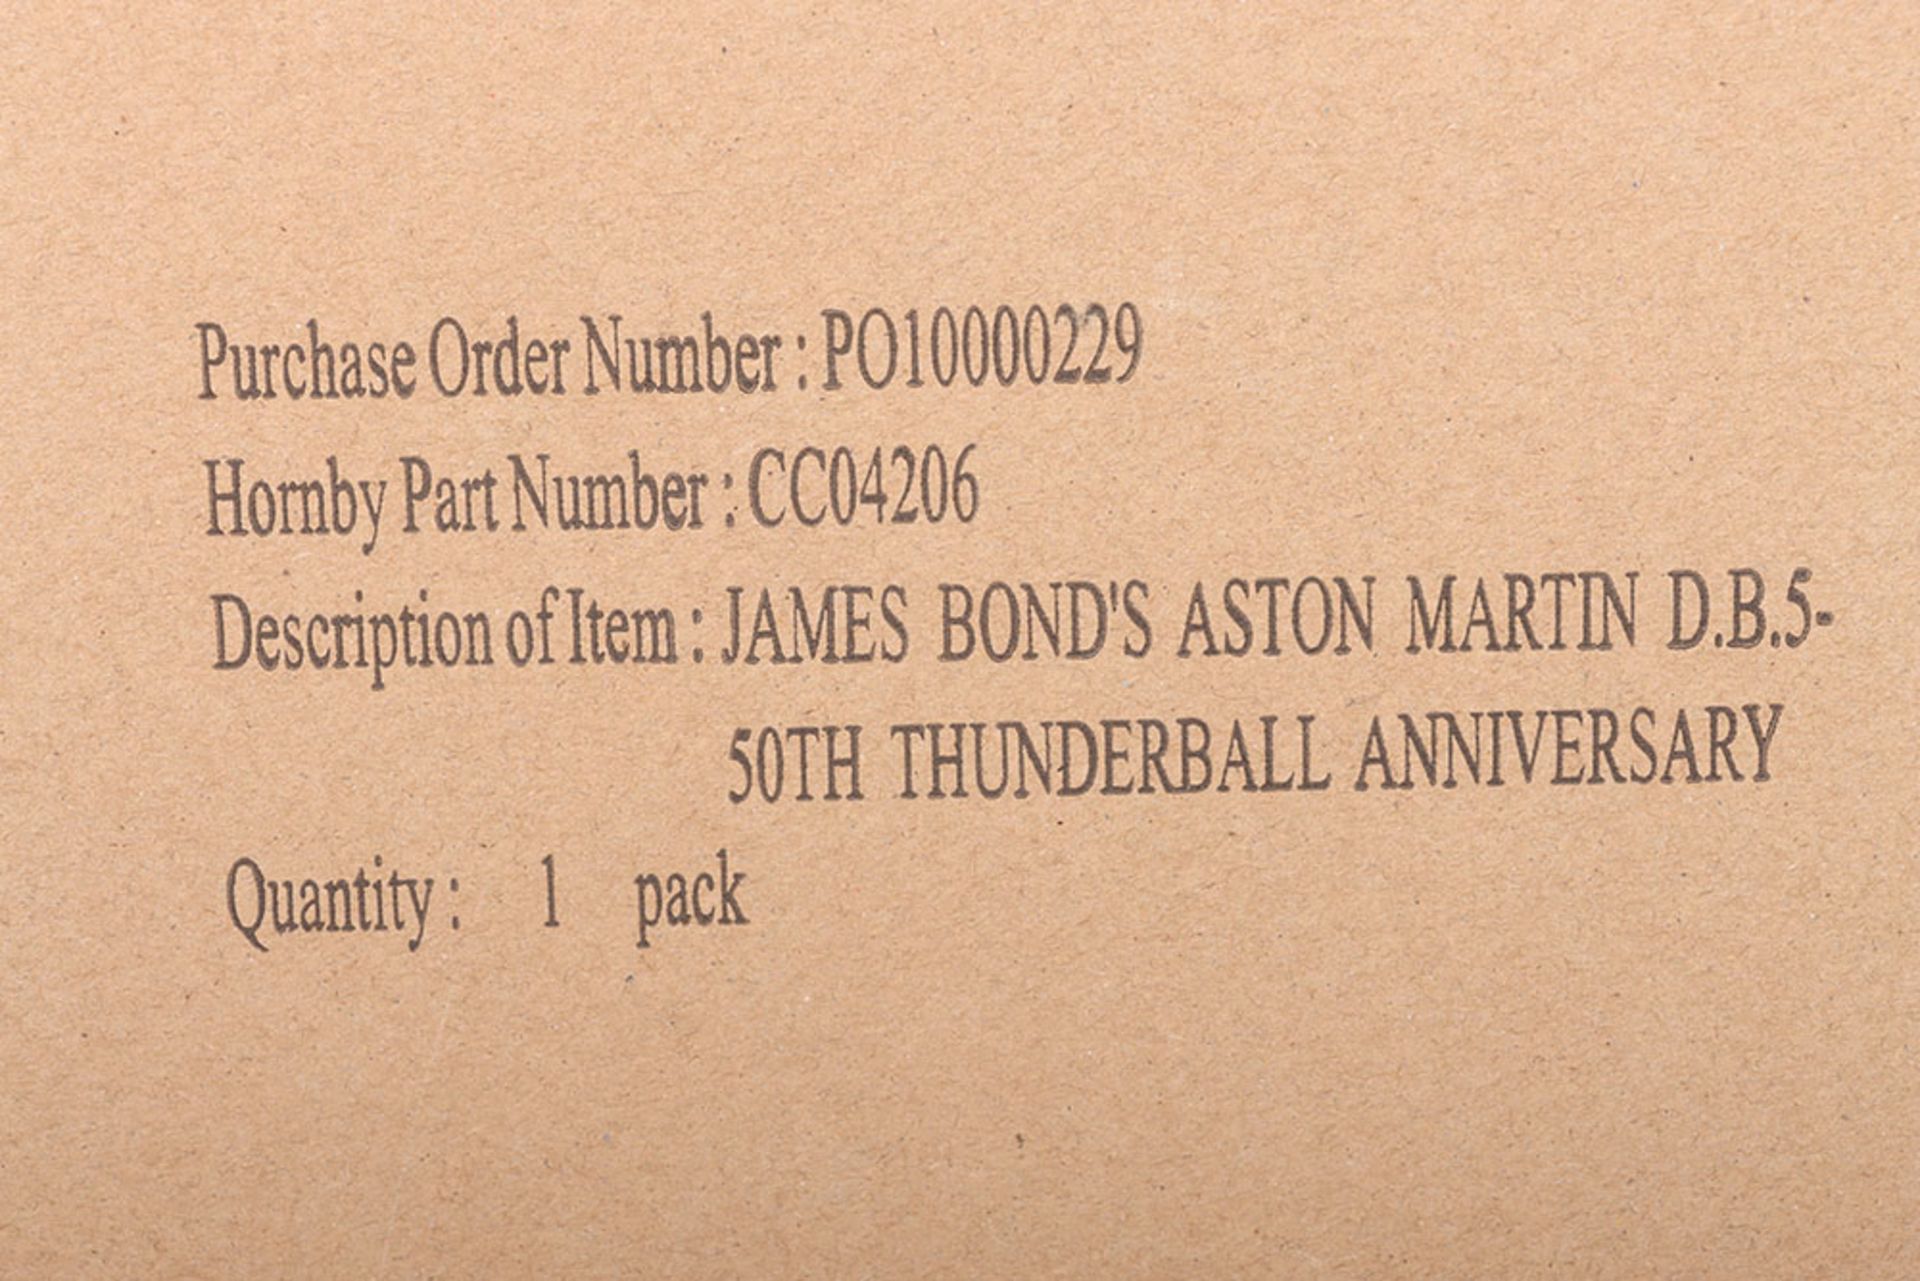 Corgi Sealed Trade Pack of six James Bonds Aston Martin D.B.5 50th Thunderball Anniversary models - Image 2 of 4